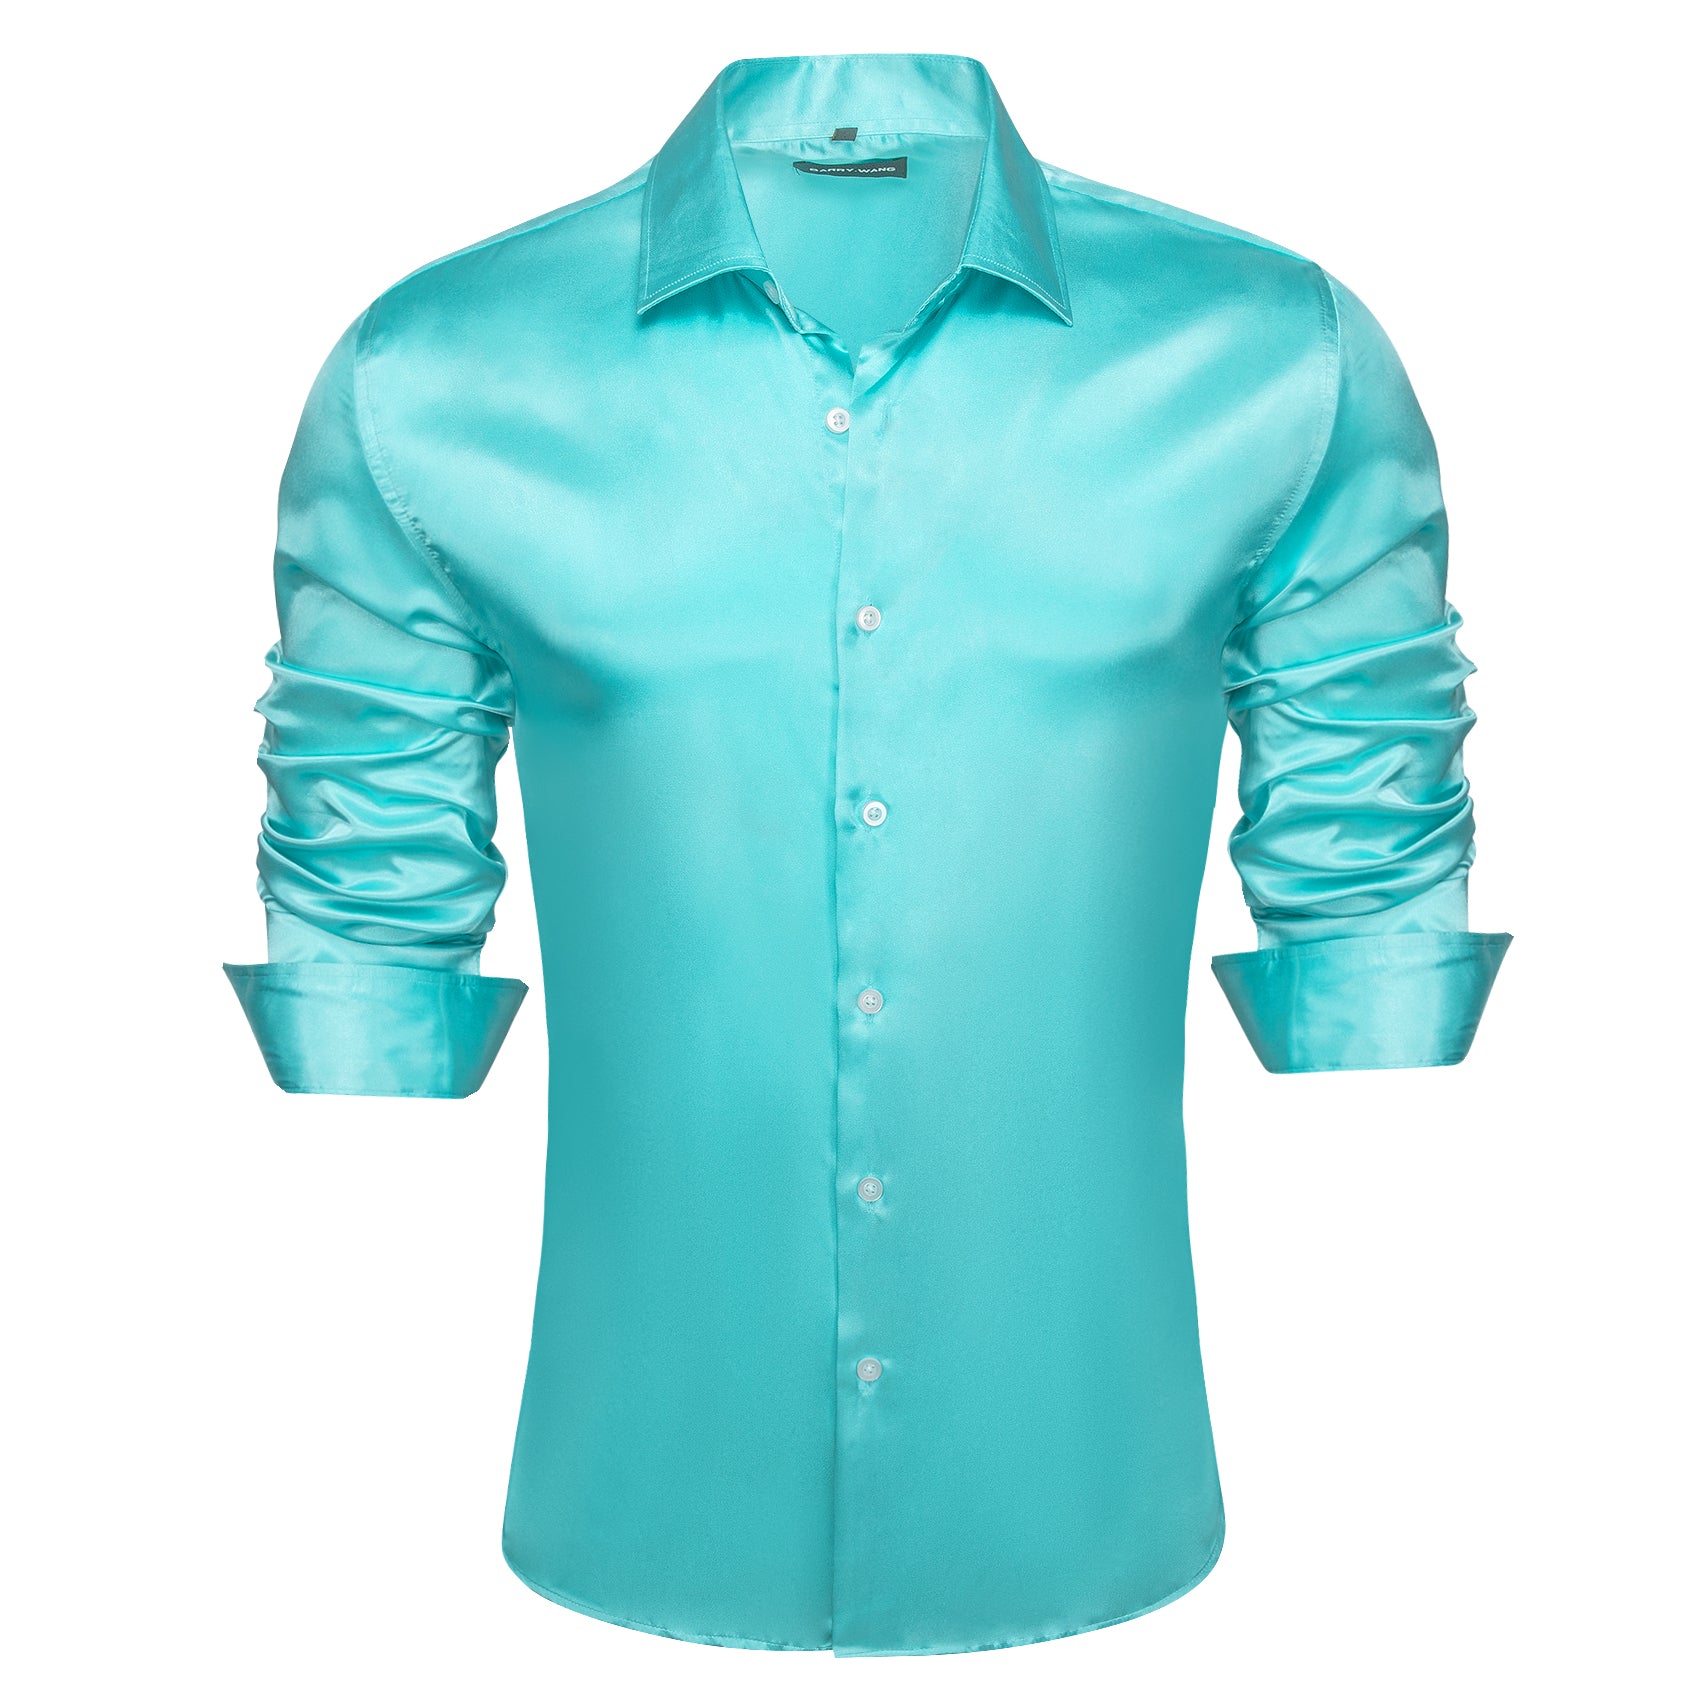 Barry.wang Button Down Shirt Cyan Blue Solid Silk Men's Long Sleeve Shirt